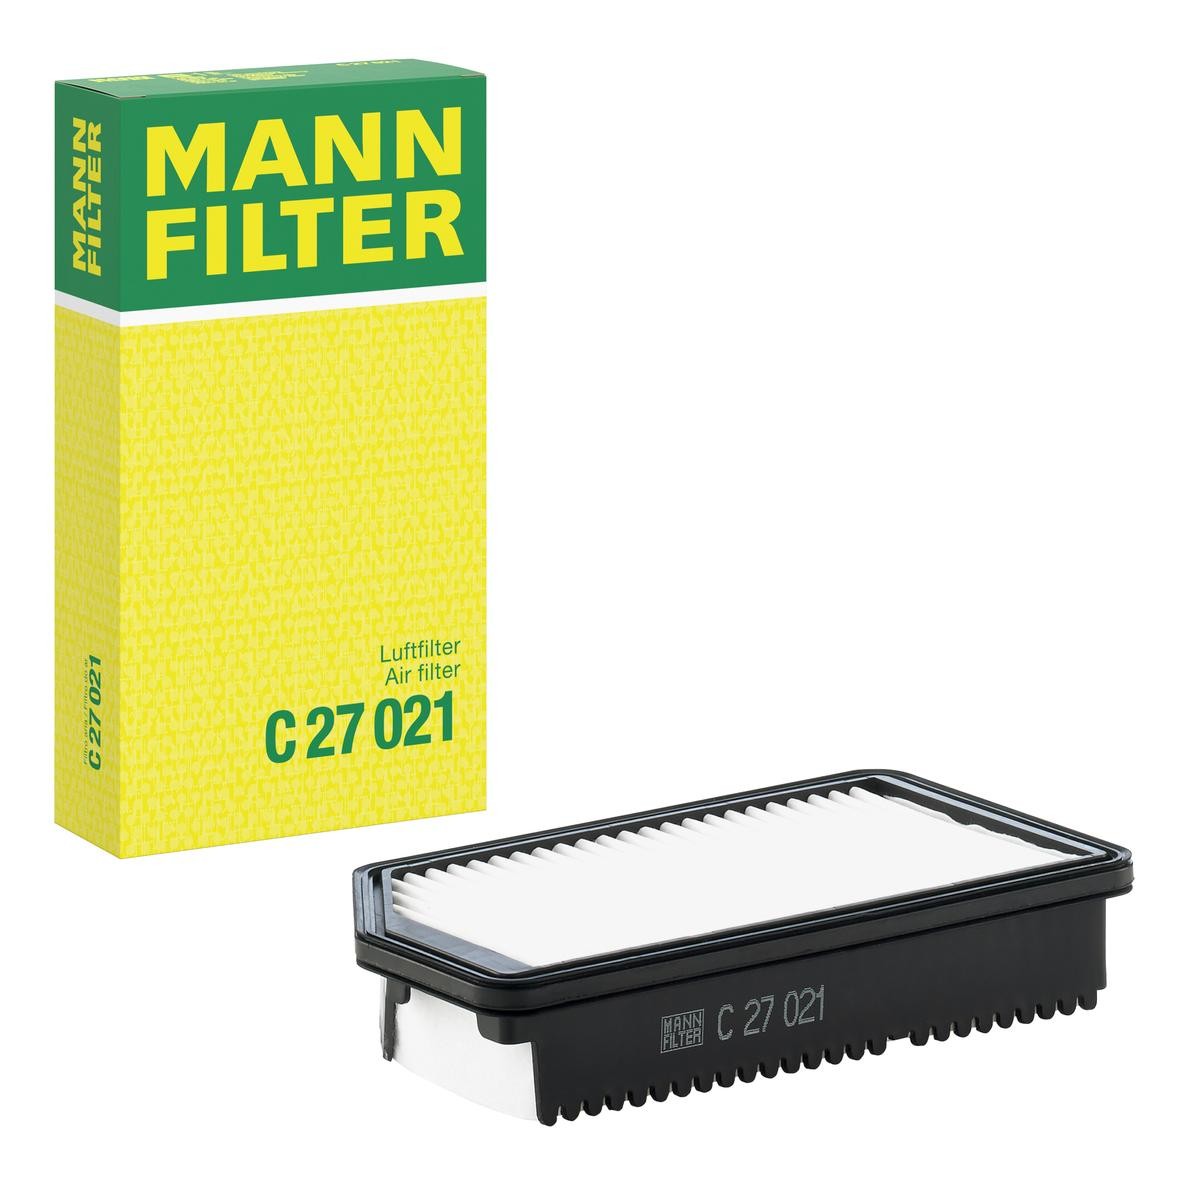 Kia Air filter MANN-FILTER C 27 021 at a good price